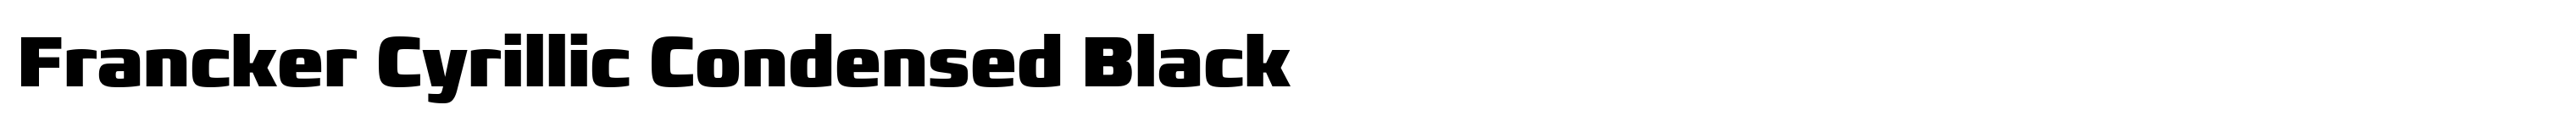 Francker Cyrillic Condensed Black